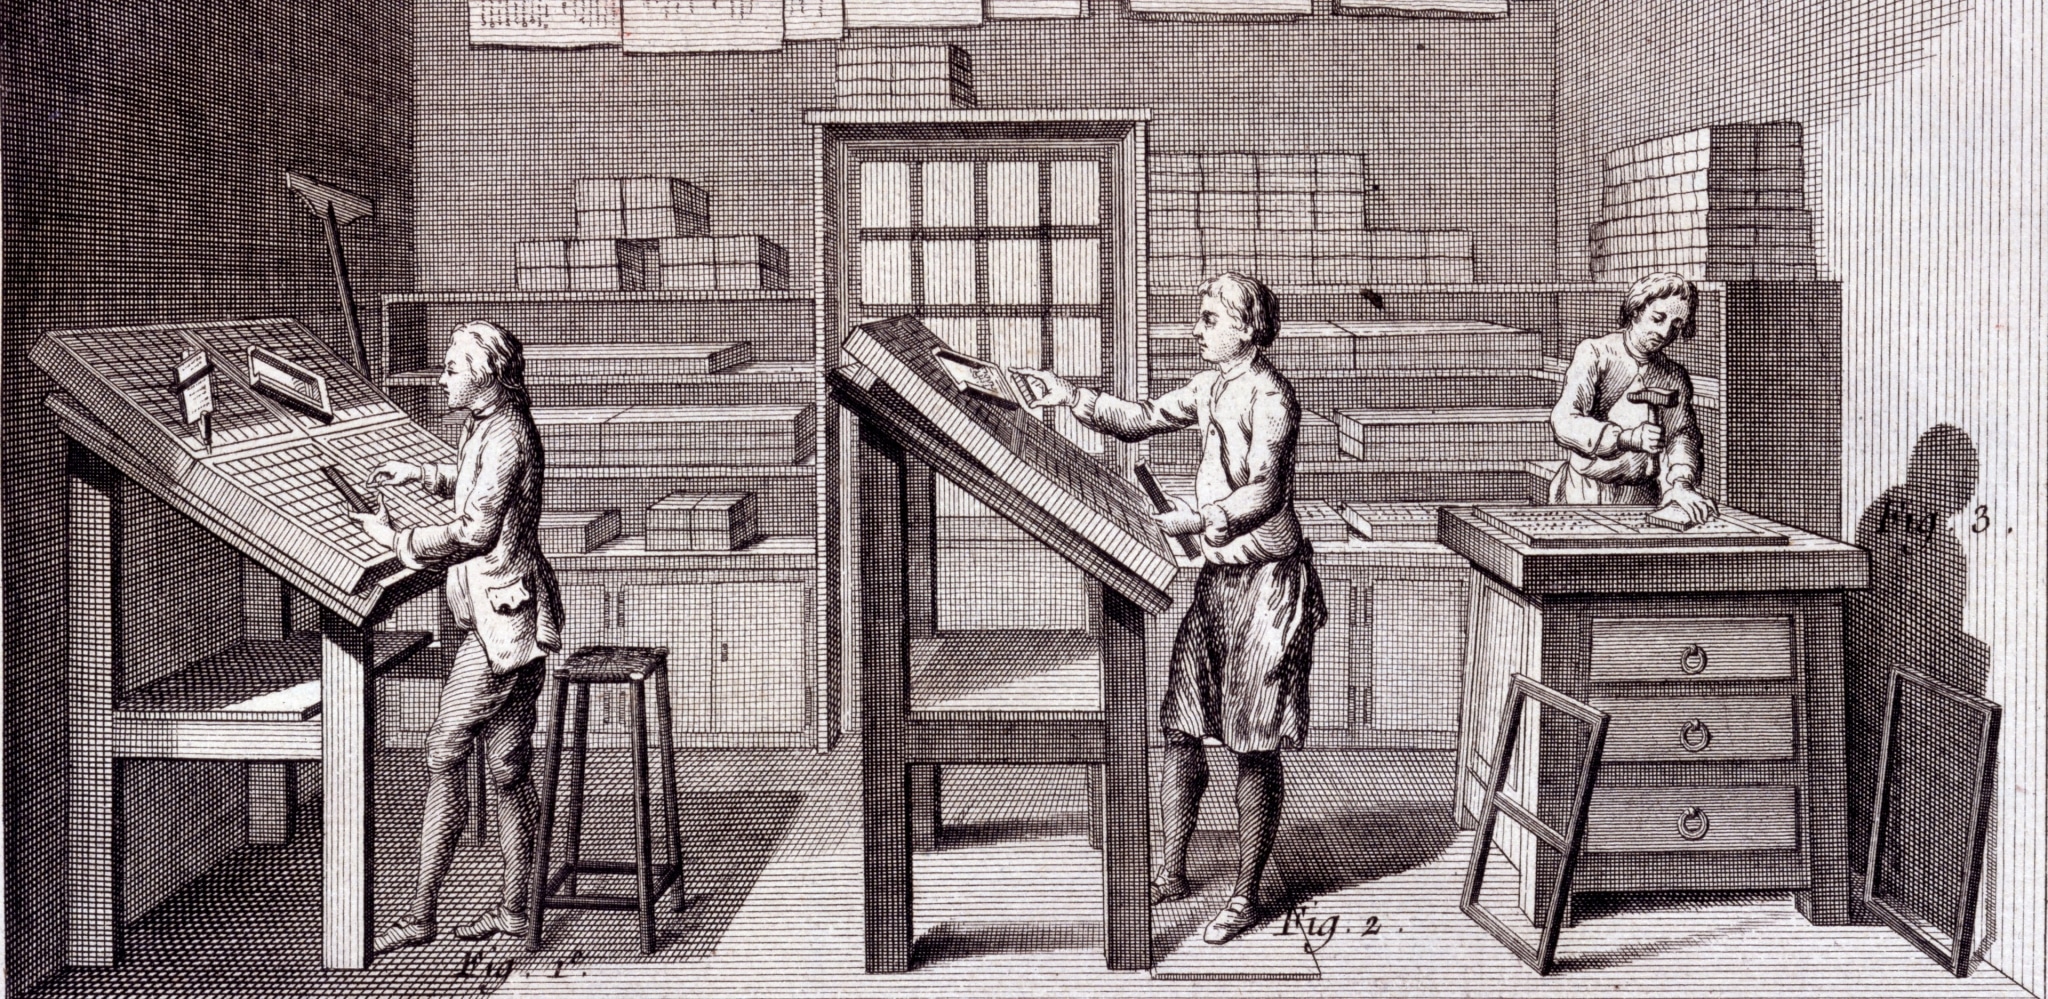 Illustration of three people setting type before printing